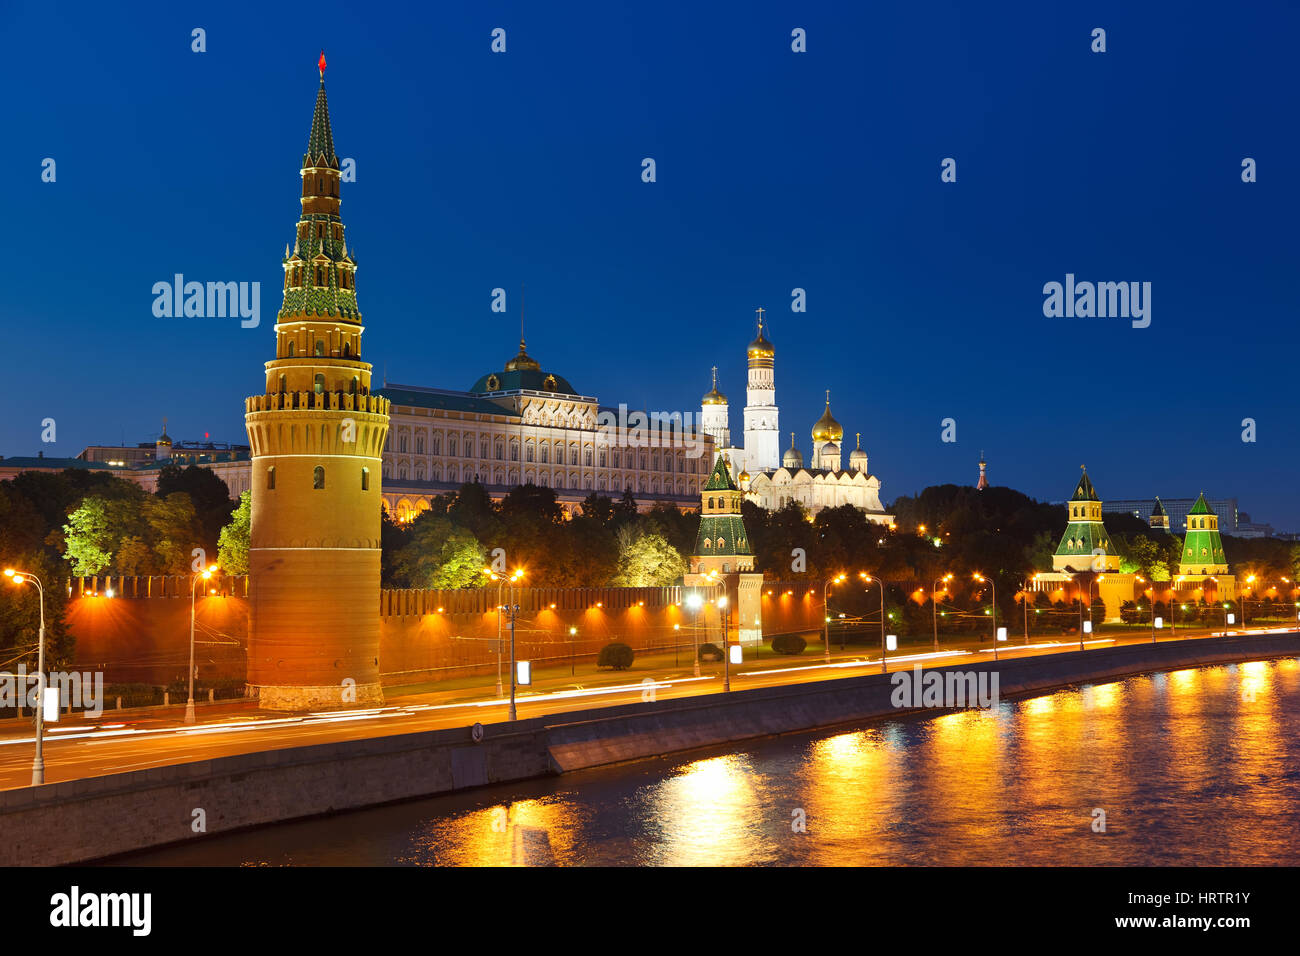 Moscow Kremlin at night Stock Photo